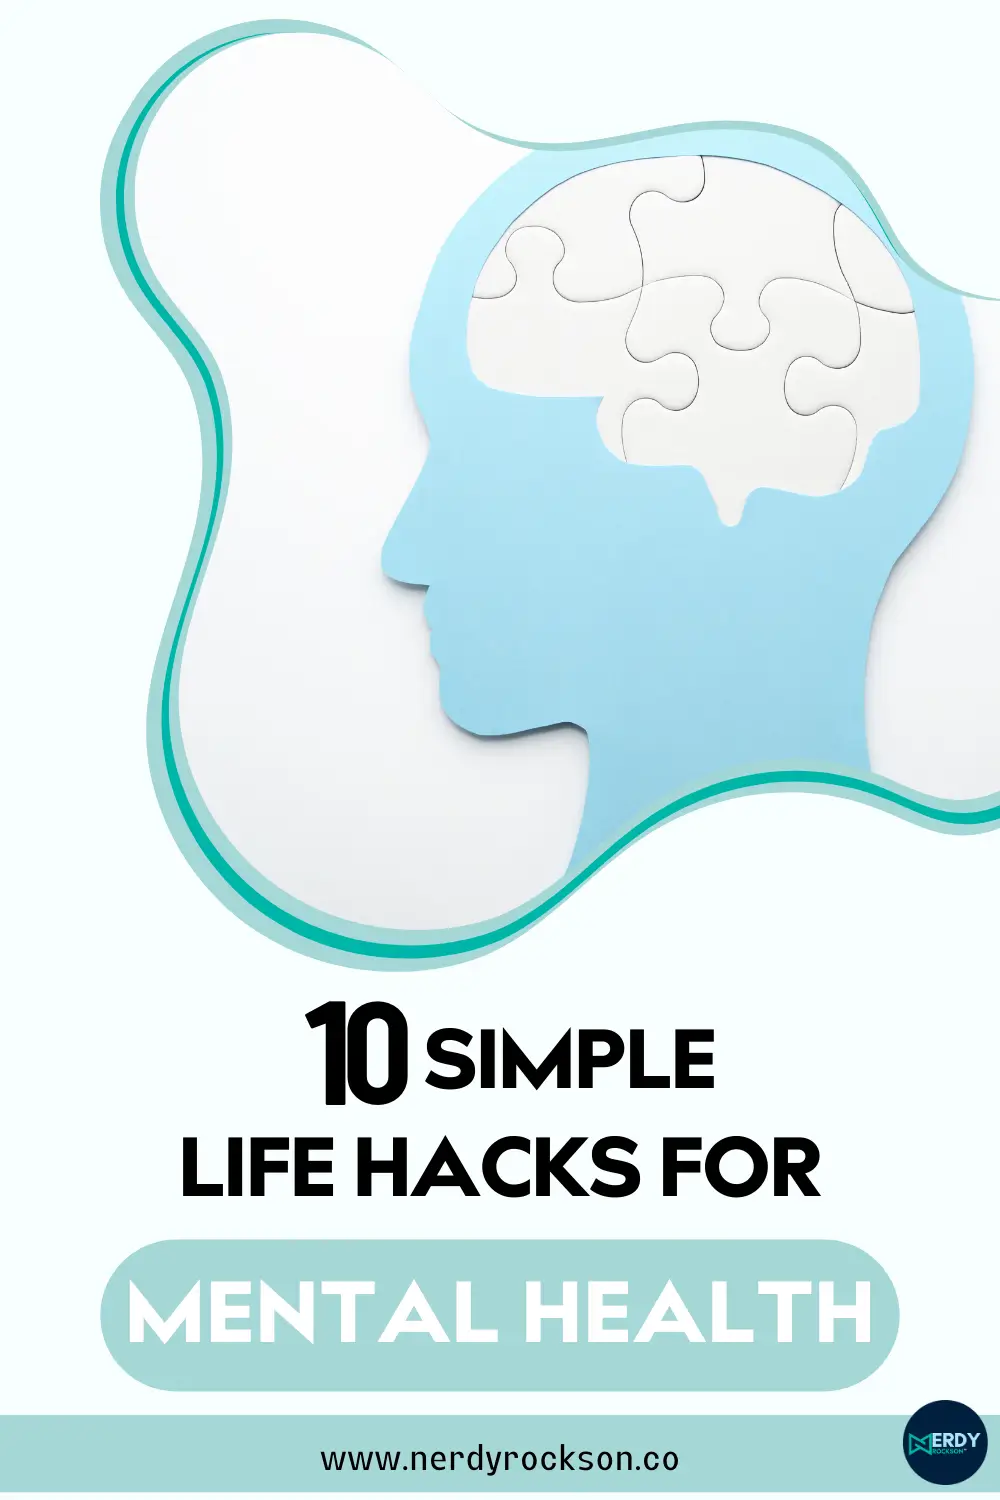 10 Proven Life Hacks for Mental Health Boost